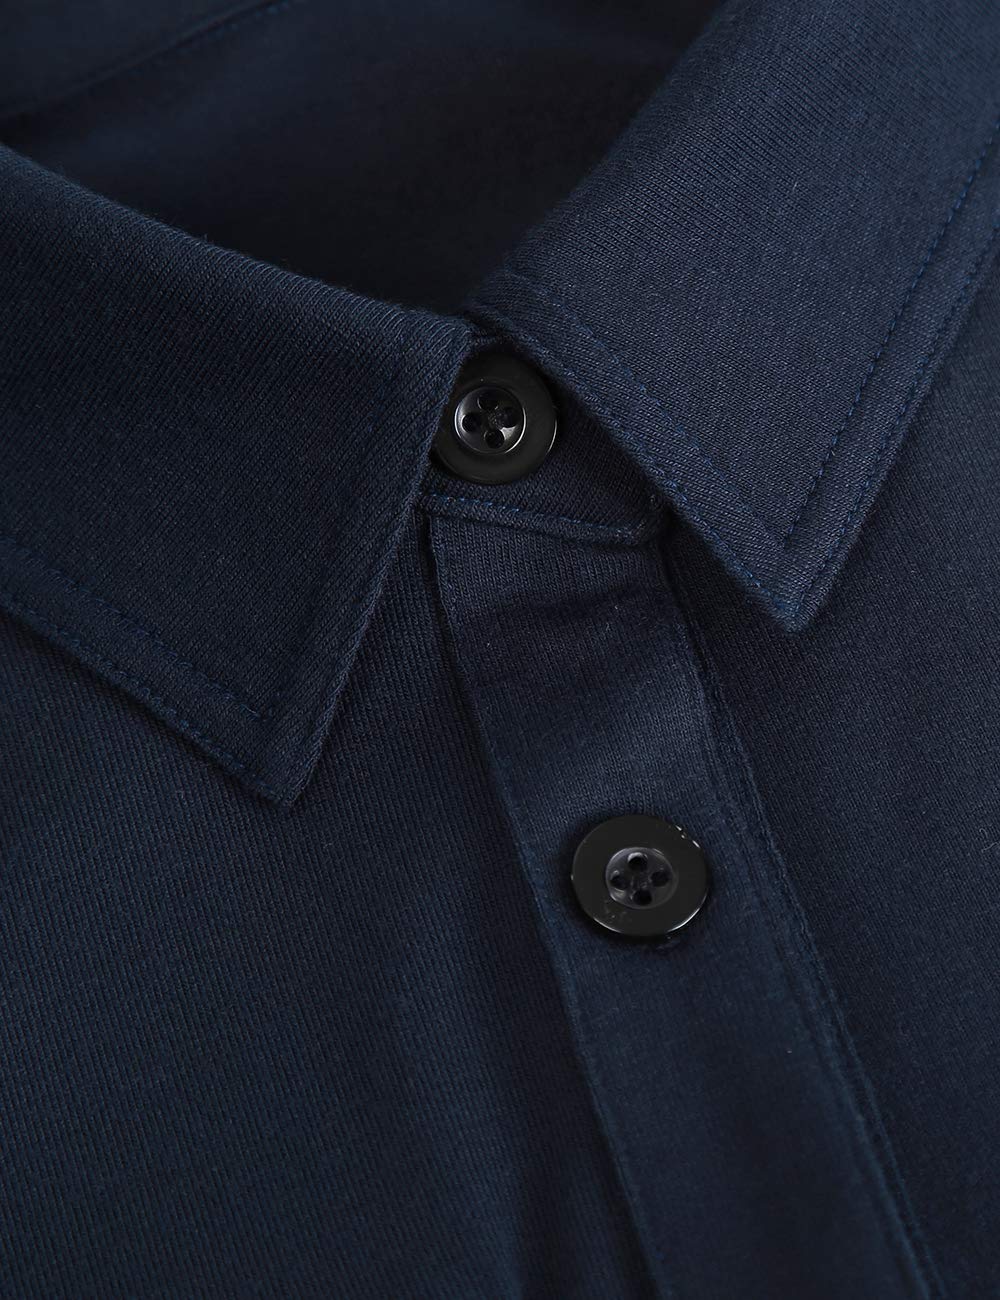 DJT Roll Up Long Sleeve Navy Women’s  Collared Button Down Plaid Shirt